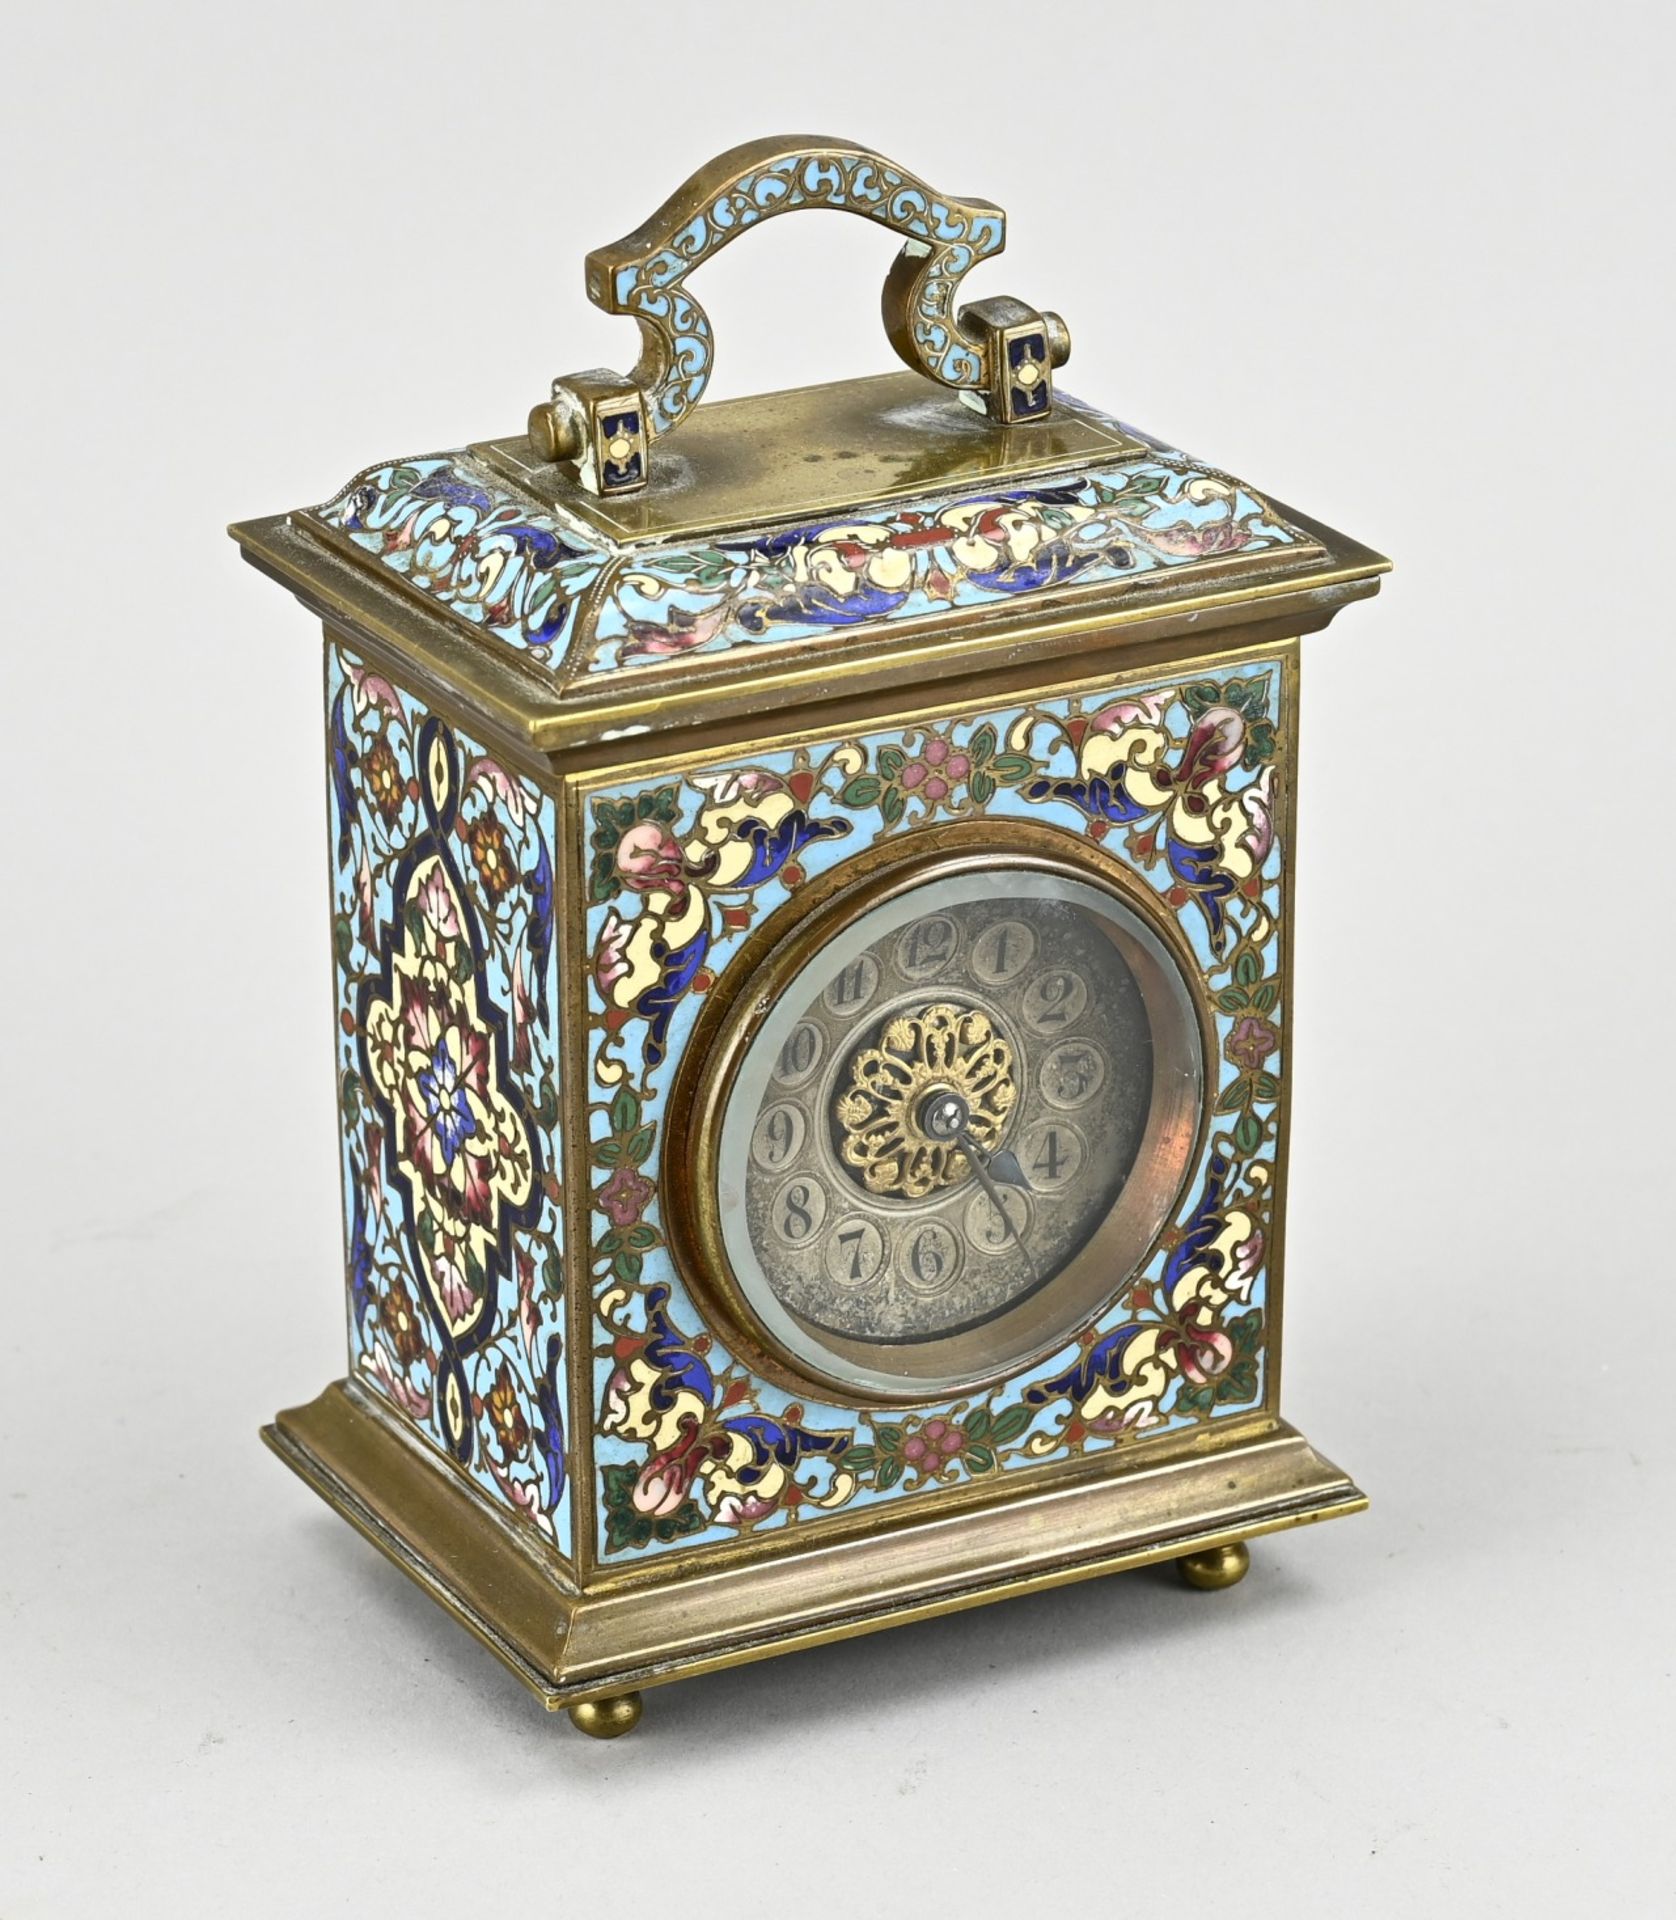 French travel alarm clock, 1880